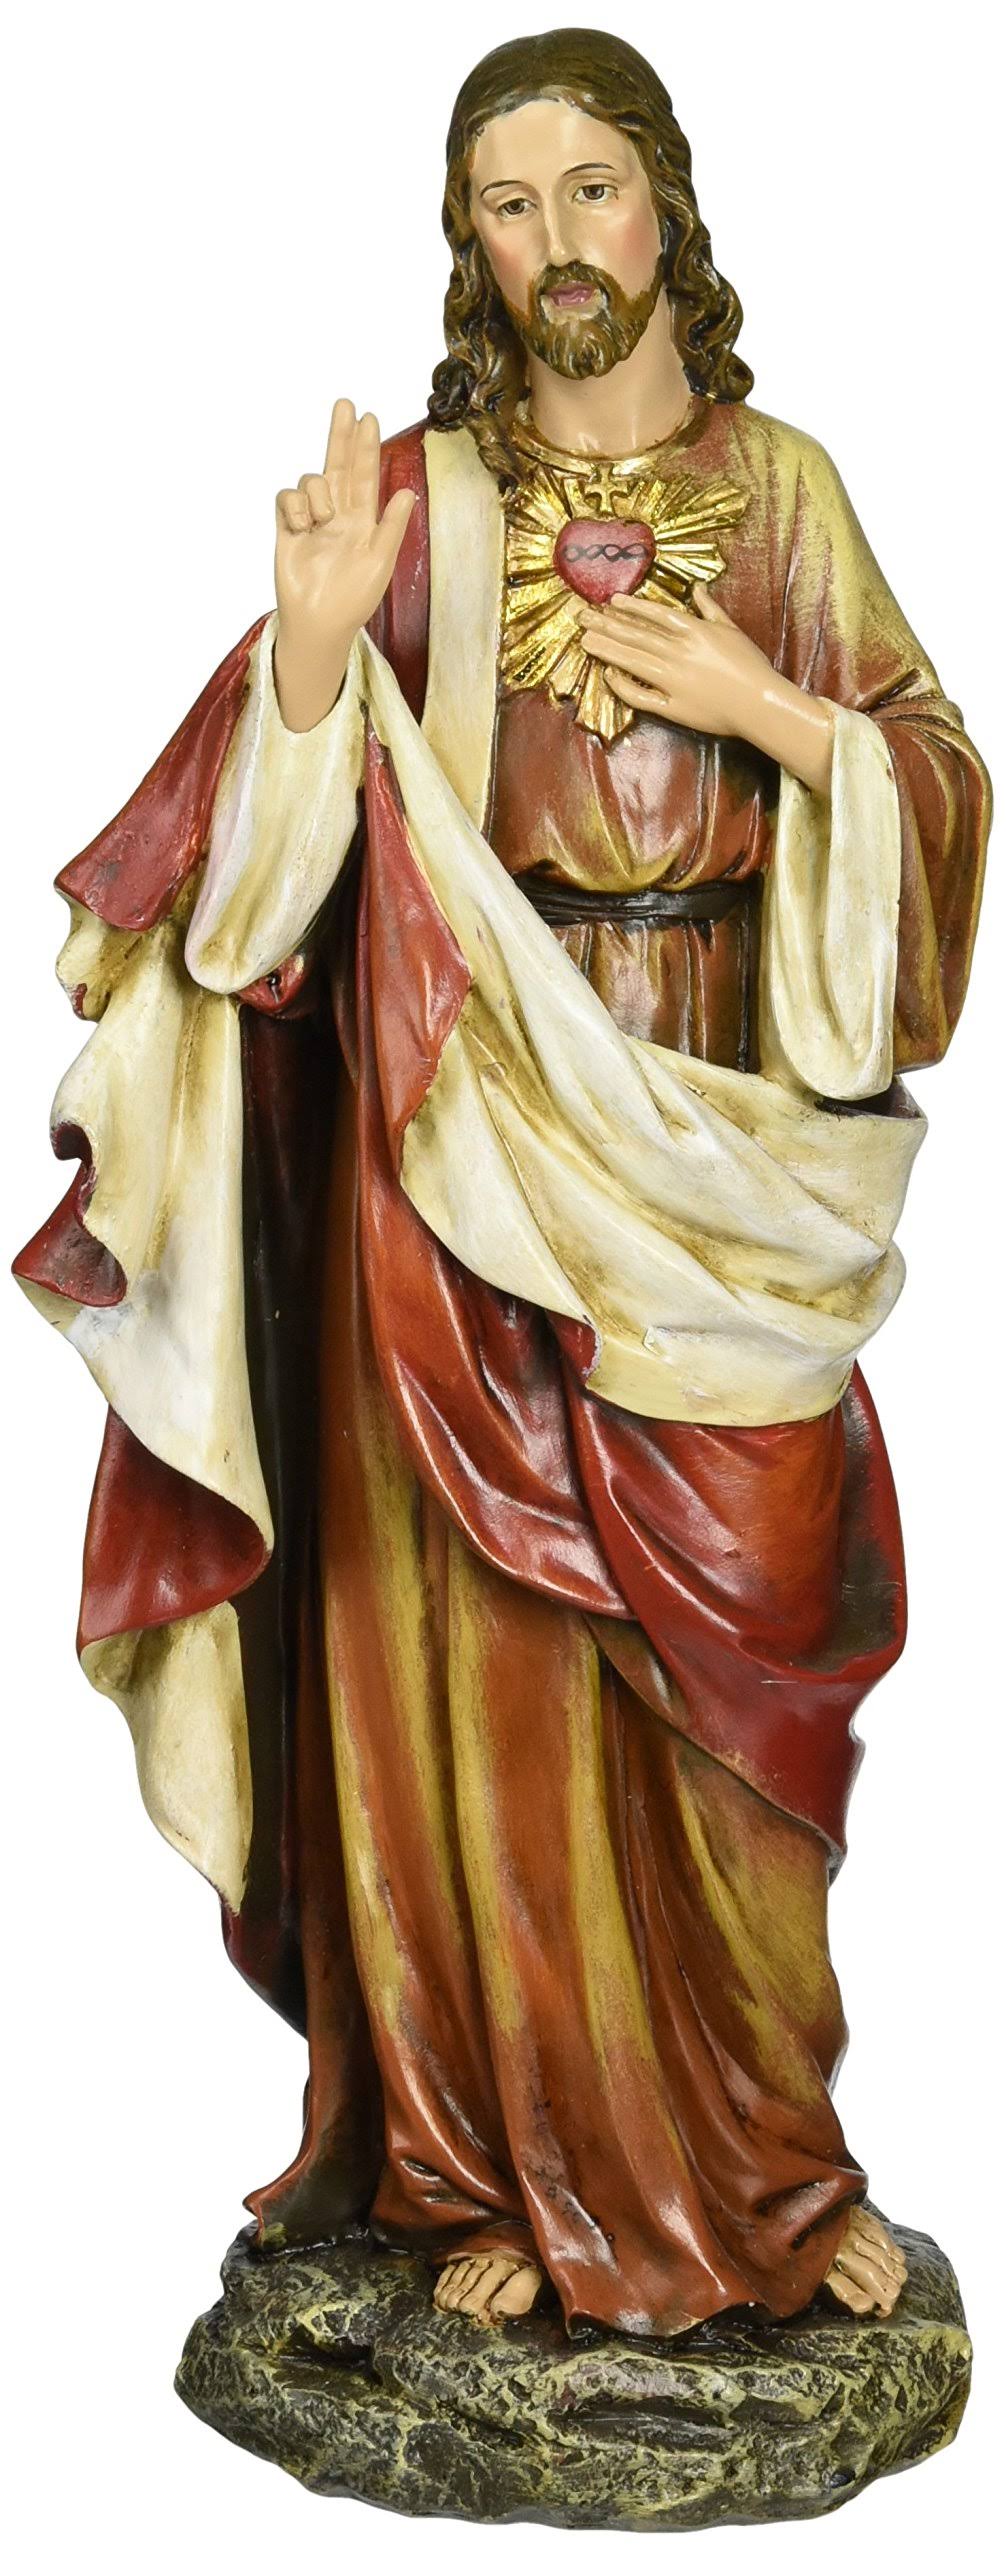 Joseph's Studio Roman Tall Sacred Heart of Jesus Figure - Made of Stone Resin and Hand Painted, 10.25"